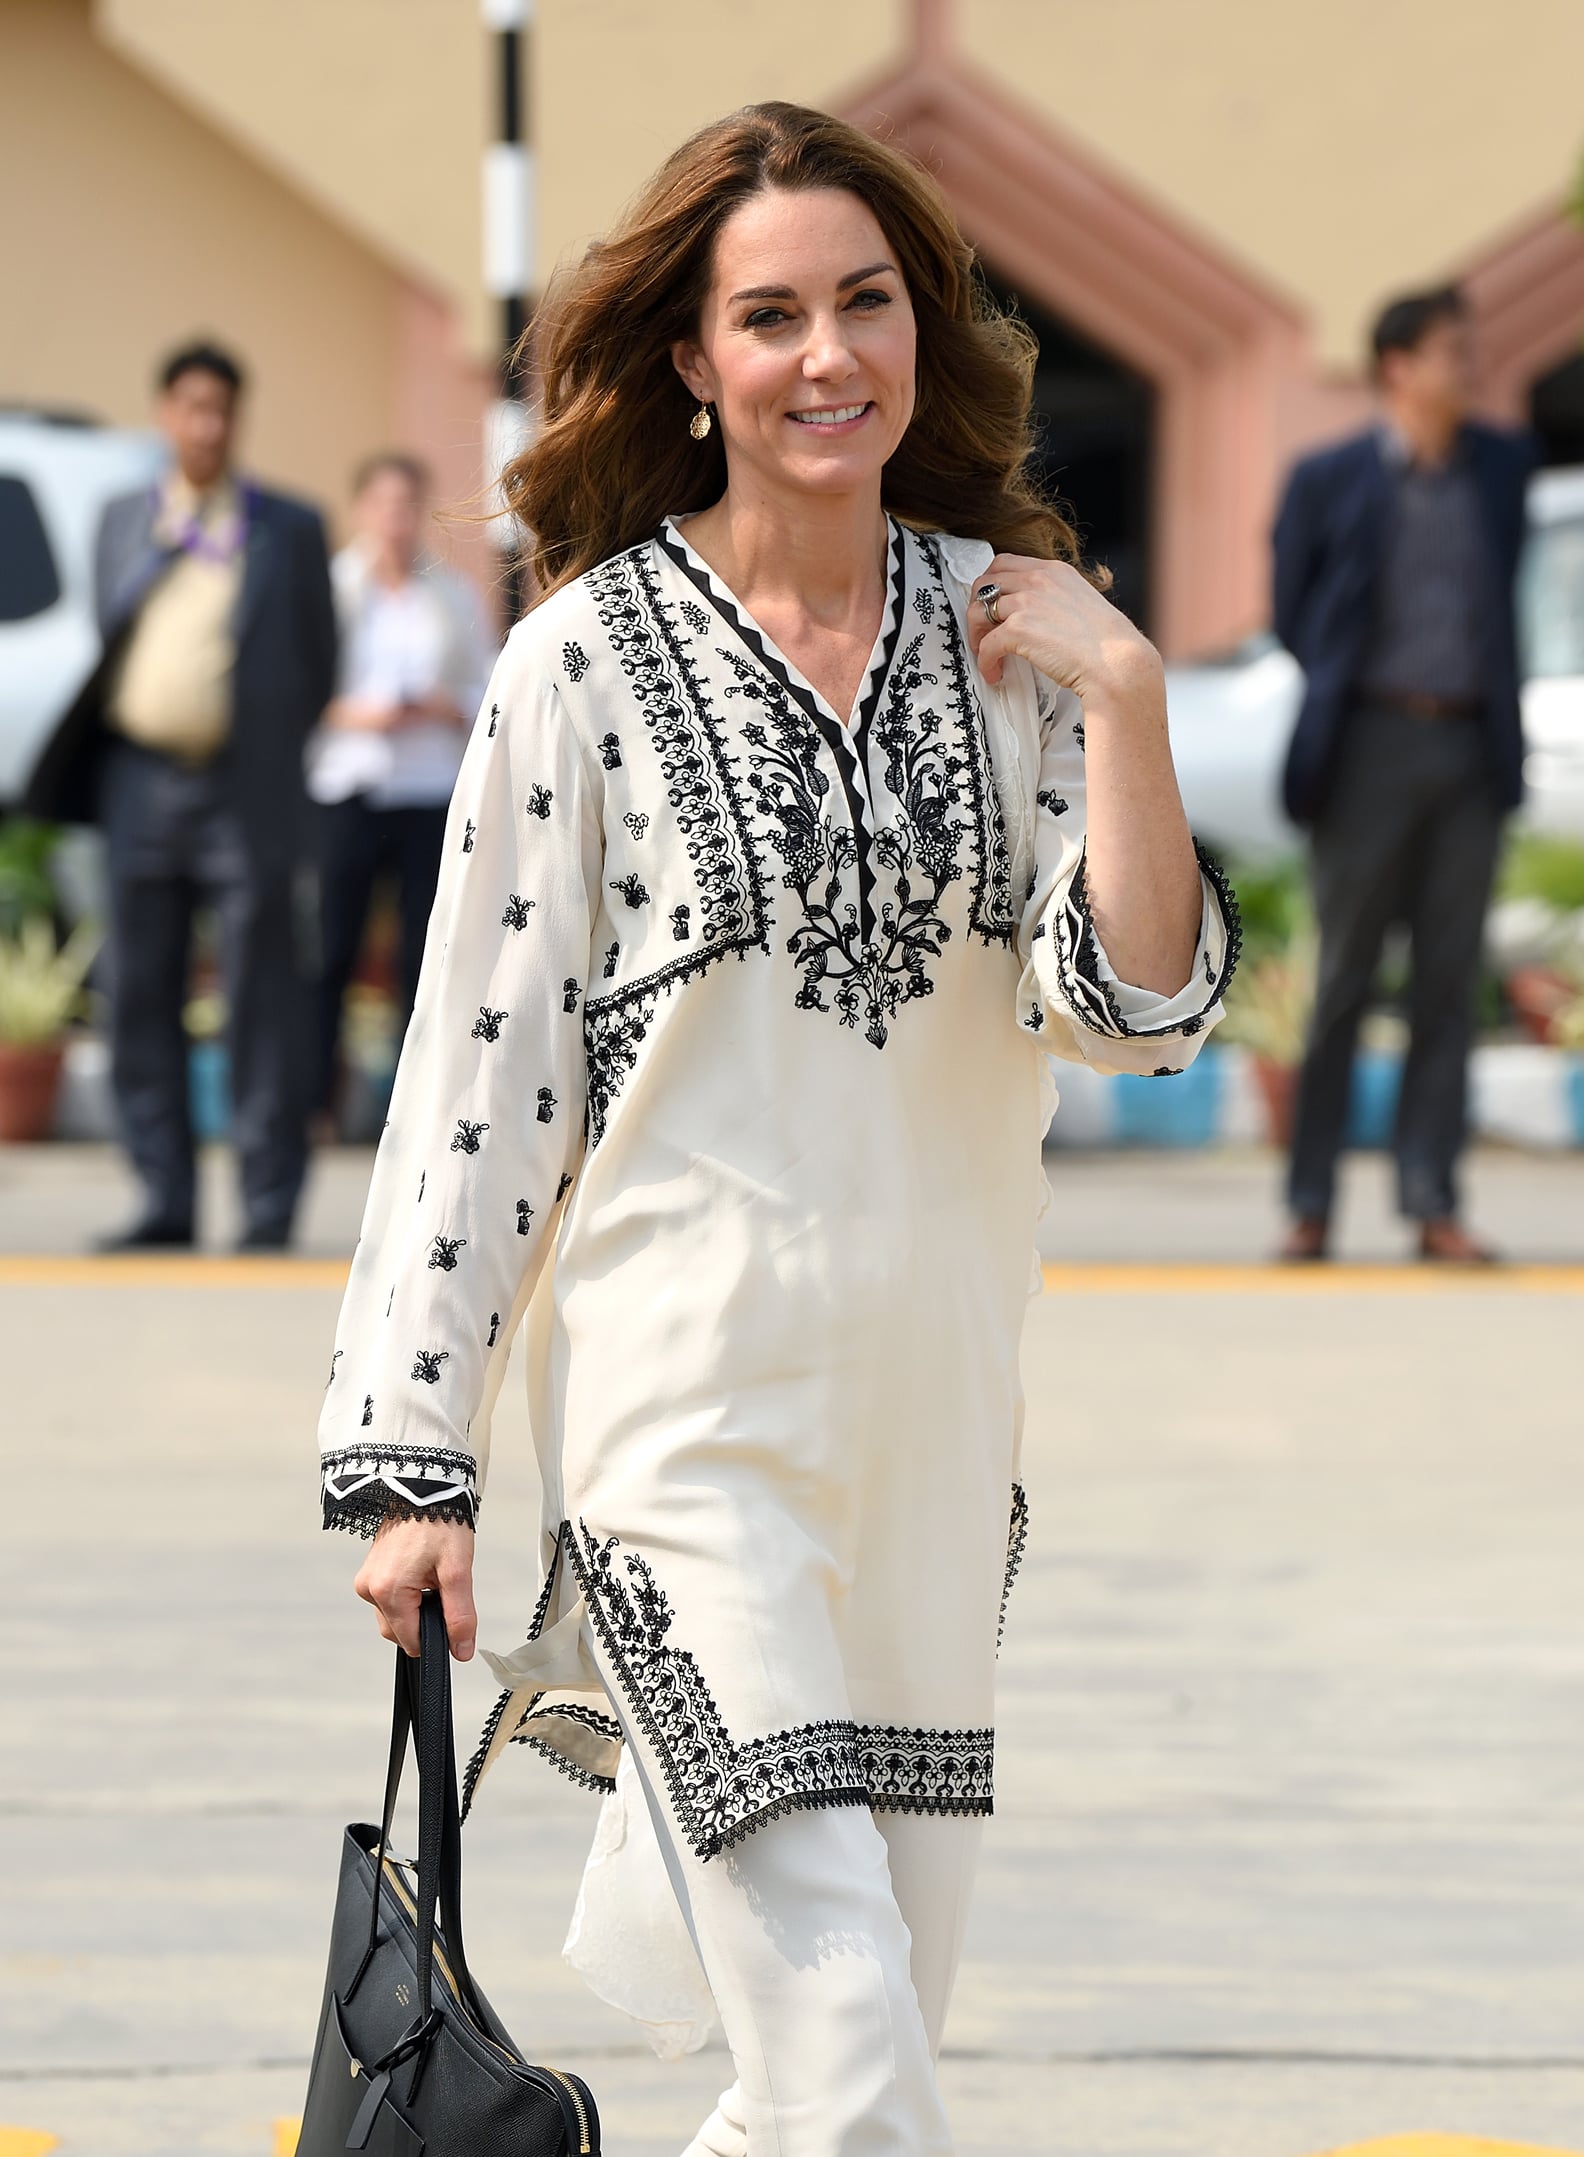 Prince William and Kate Middleton Pakistan Royal Tour Photos | POPSUGAR ...